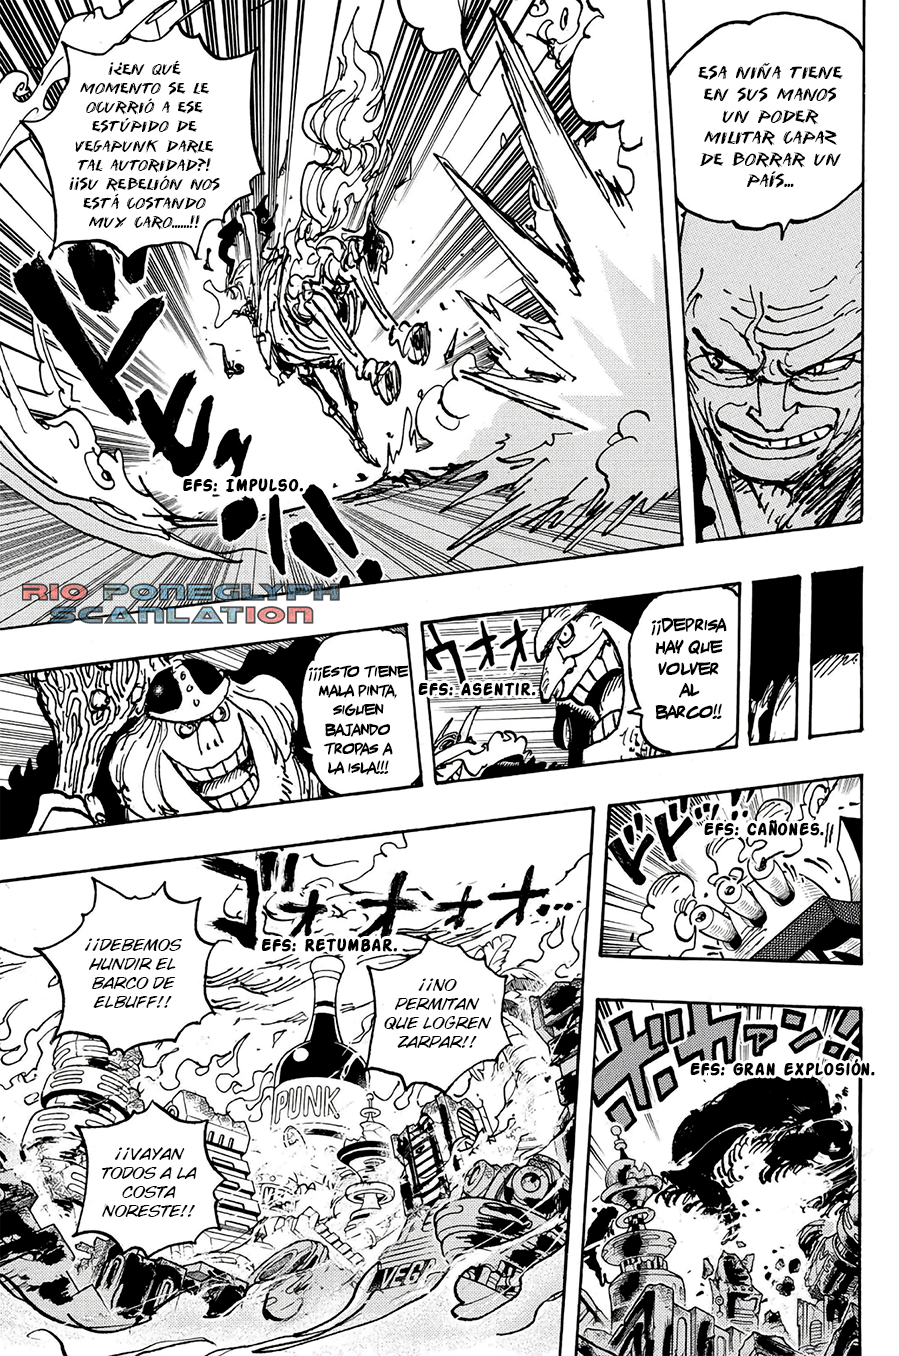 Poneglyph - One Piece Manga 1112 [Español] [Rio Poneglyph Scans] 02-2